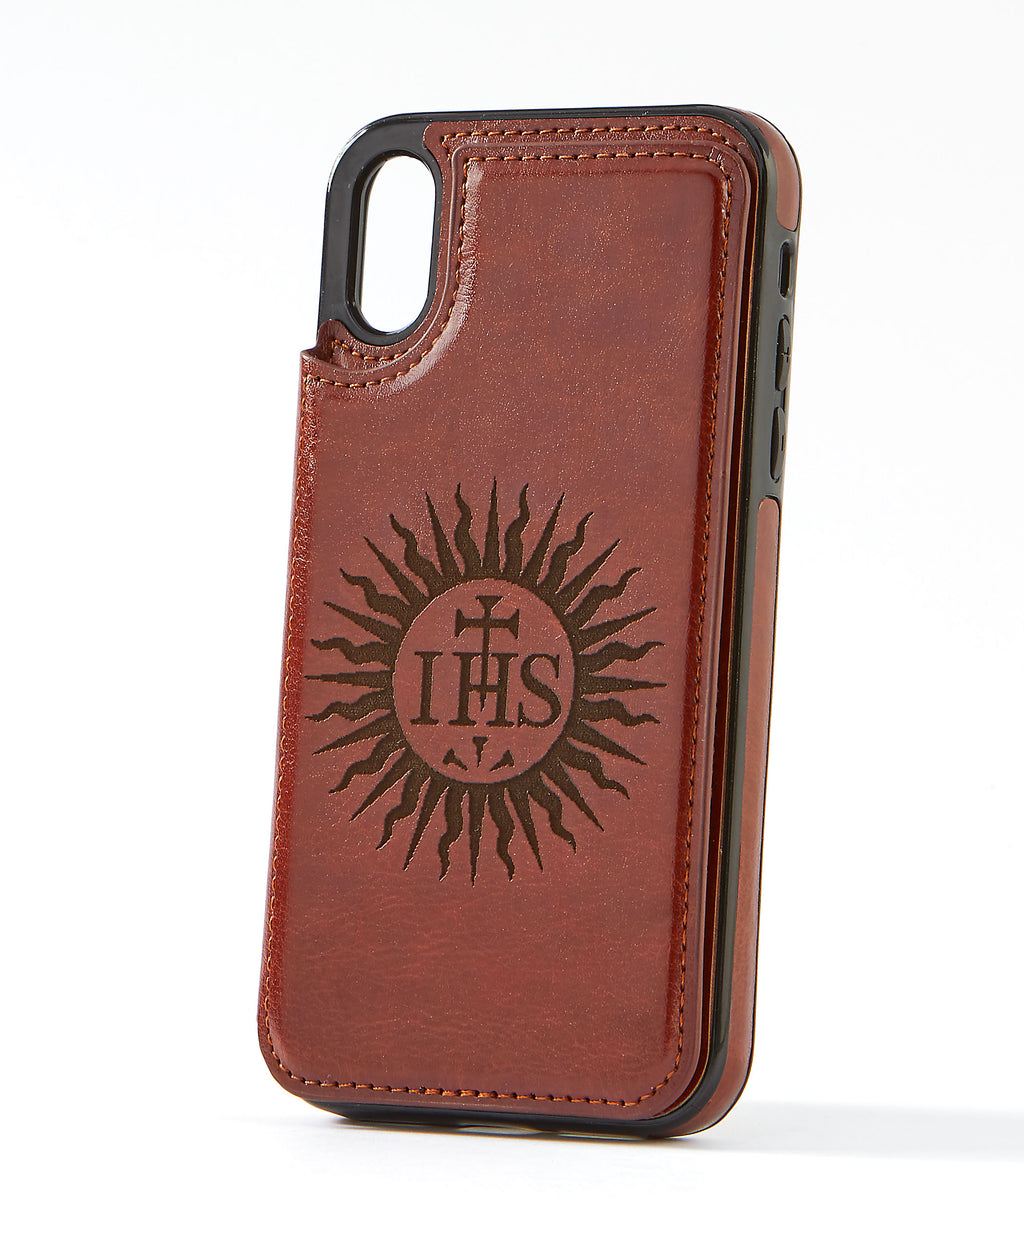 Sunburst Brown Leather Wallet Case for iPhone XR